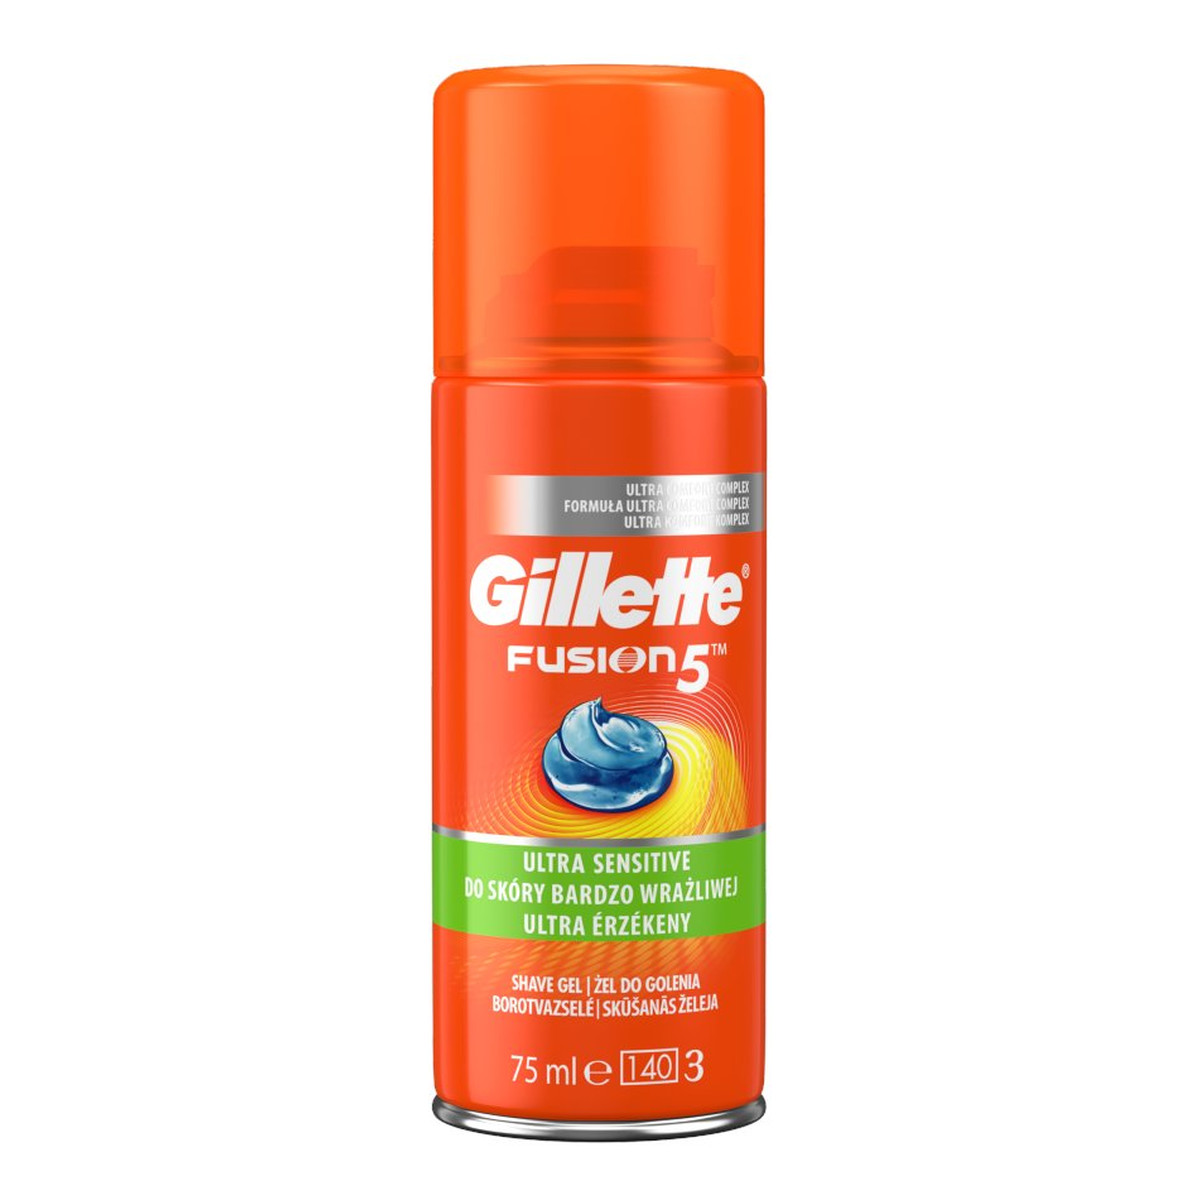 Gillette Fusion5 ULTRA SENSITIVE żel do golenia do bardzo skóry wrażliwej 75ml